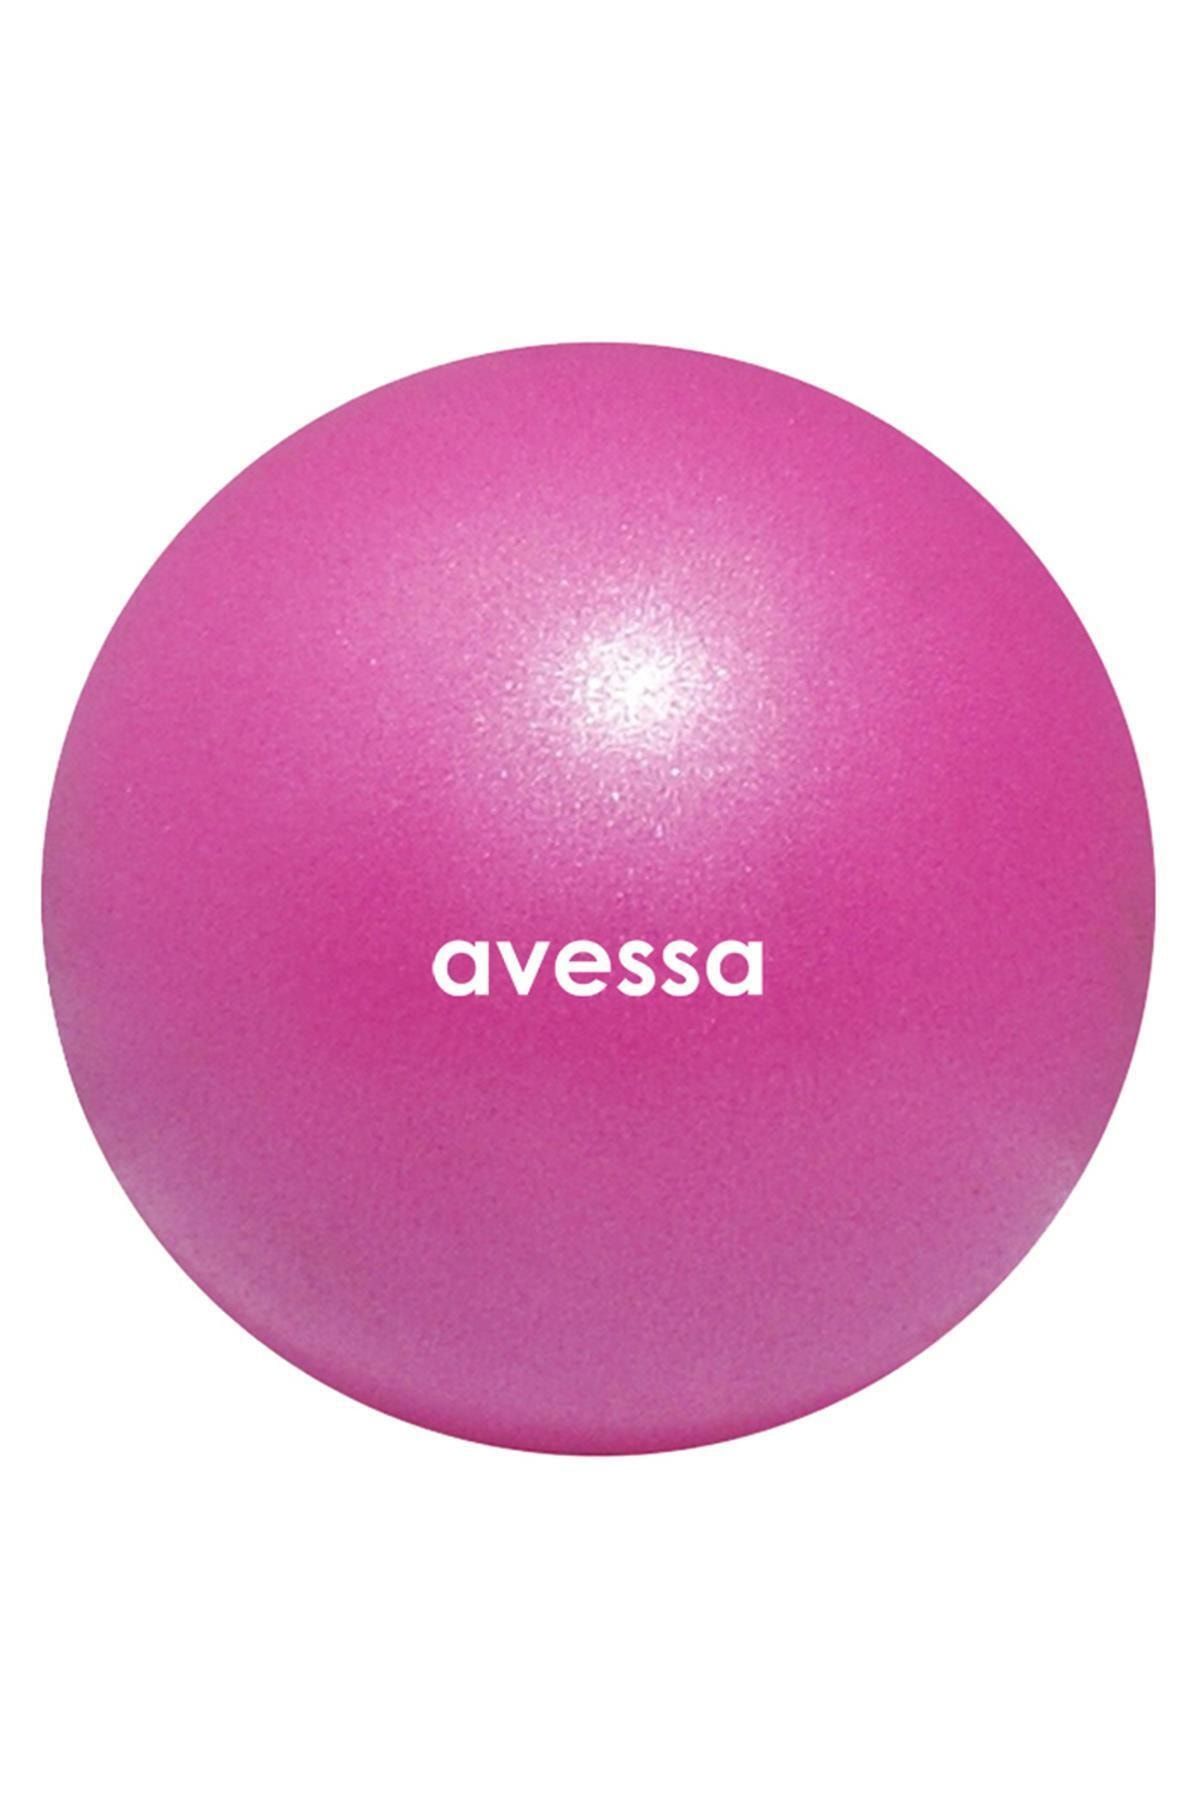 Avessa Pembe Pilates Topu